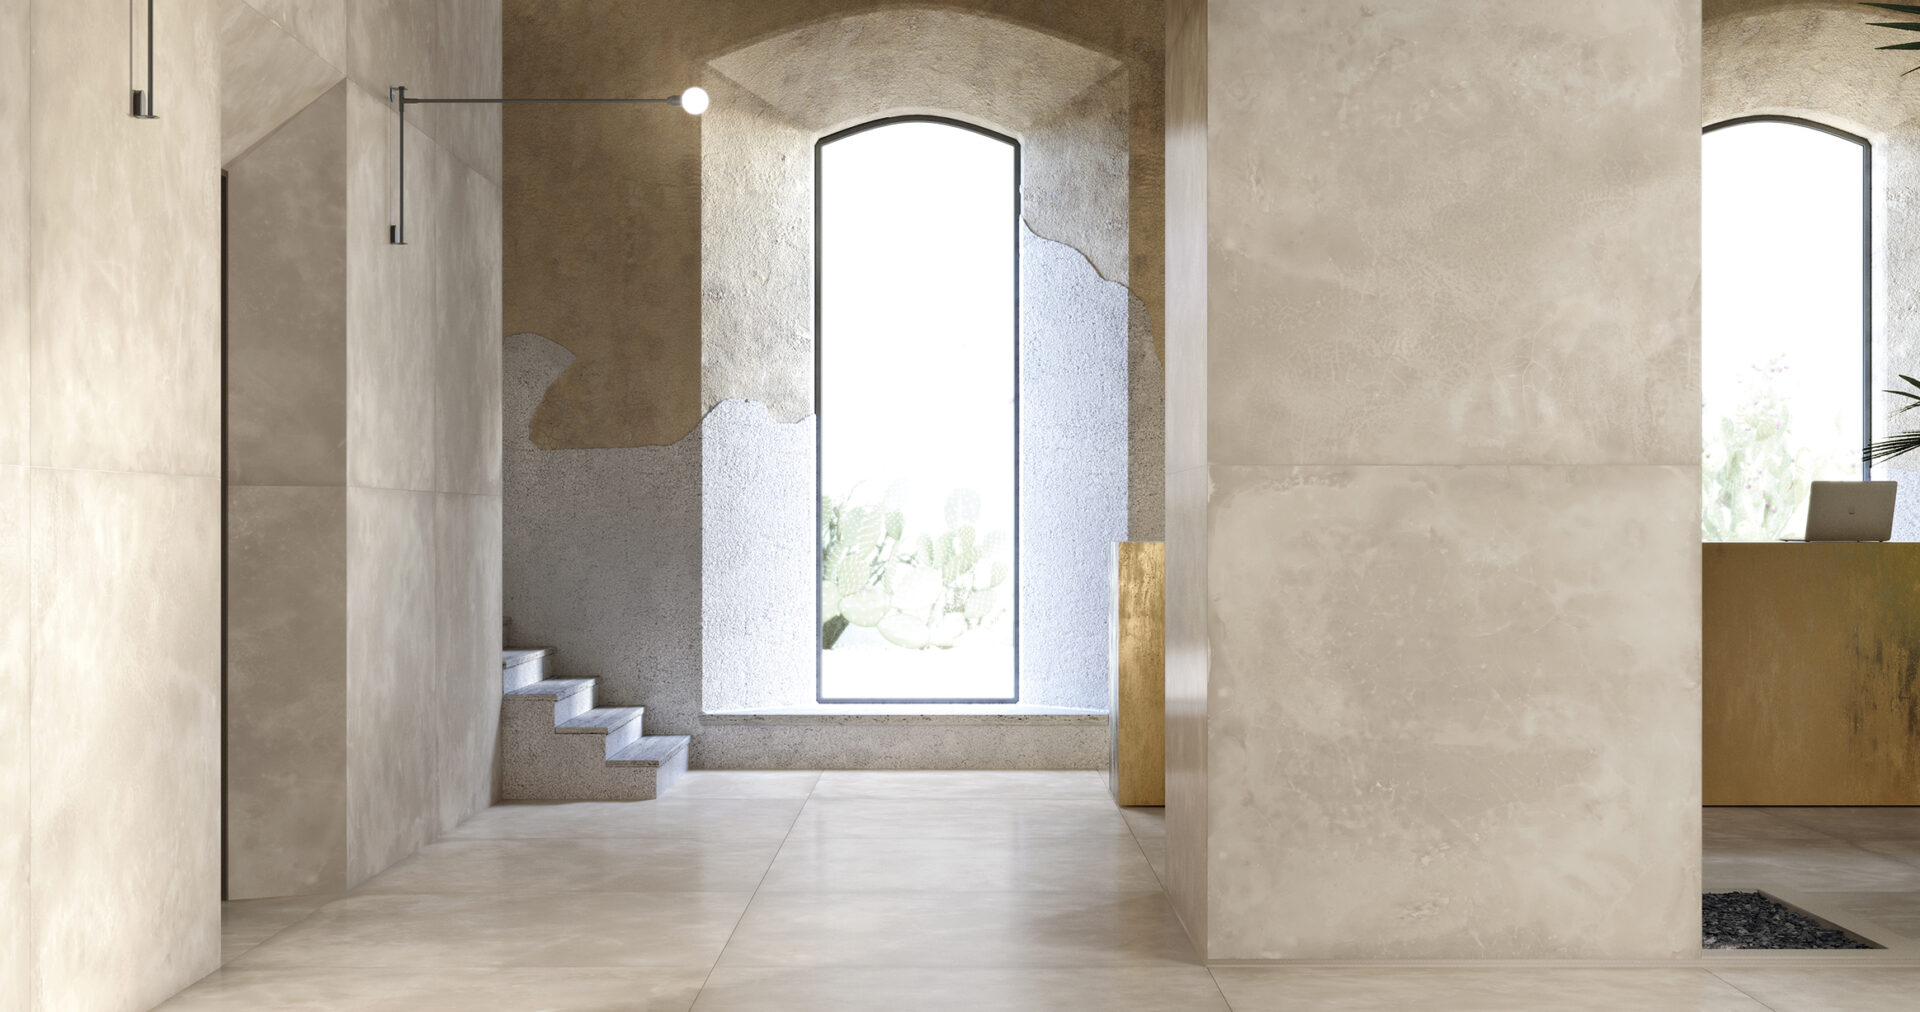 25 Modern Floor Tile Designs - The Best Tile Patterns for Every Room